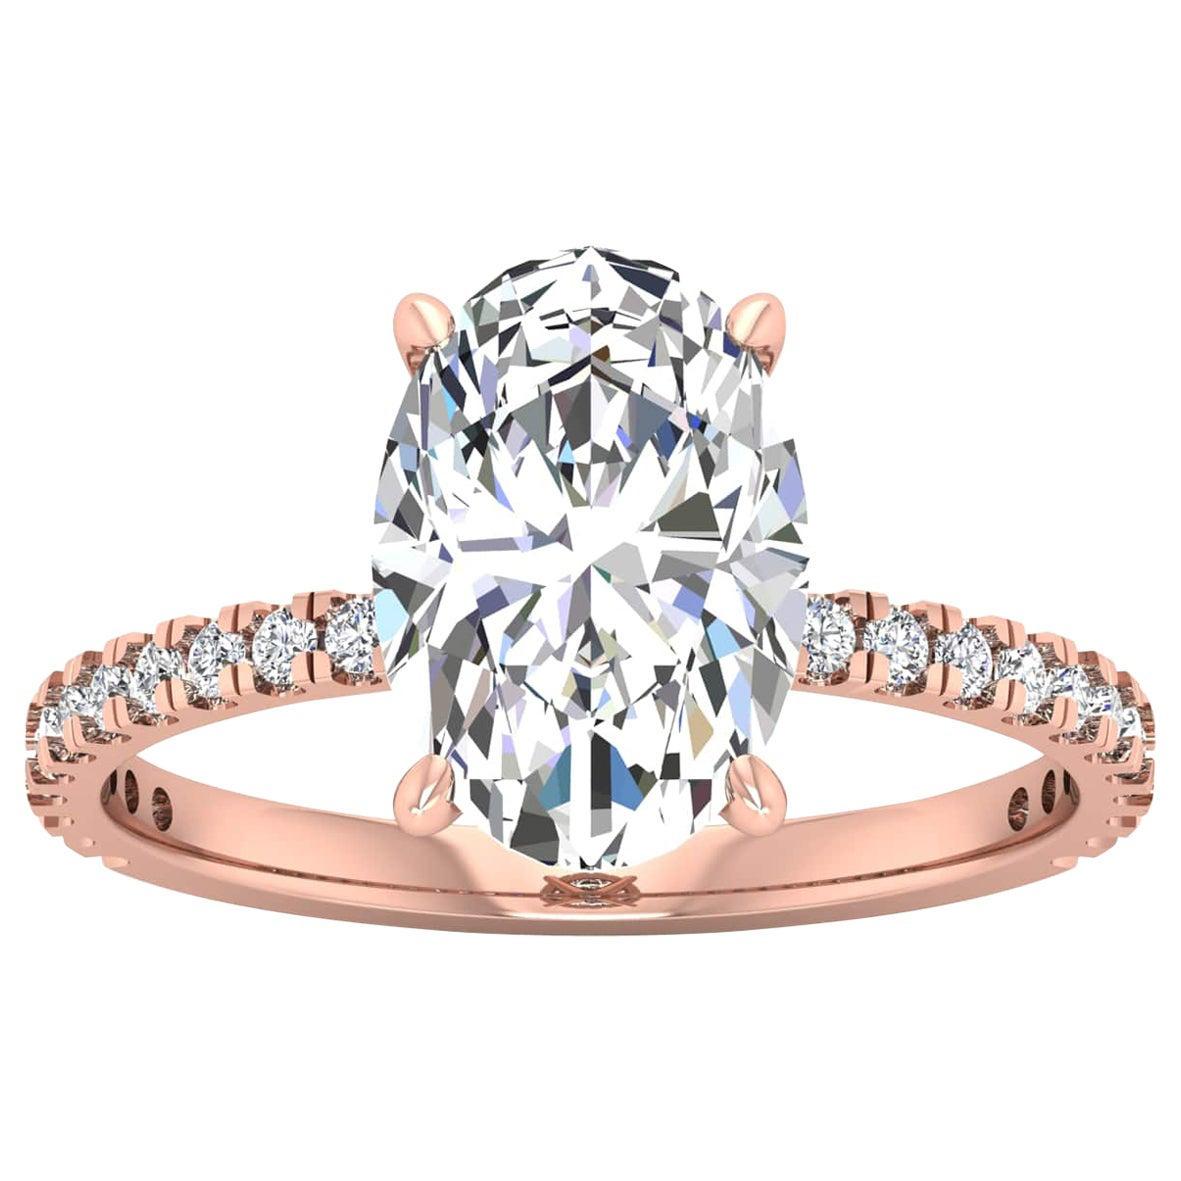 For Sale:  14 Karat Rose Gold Oval Diamond with Pavé 2.5 Carat Center '2.8 Carat' L SI2 GIA